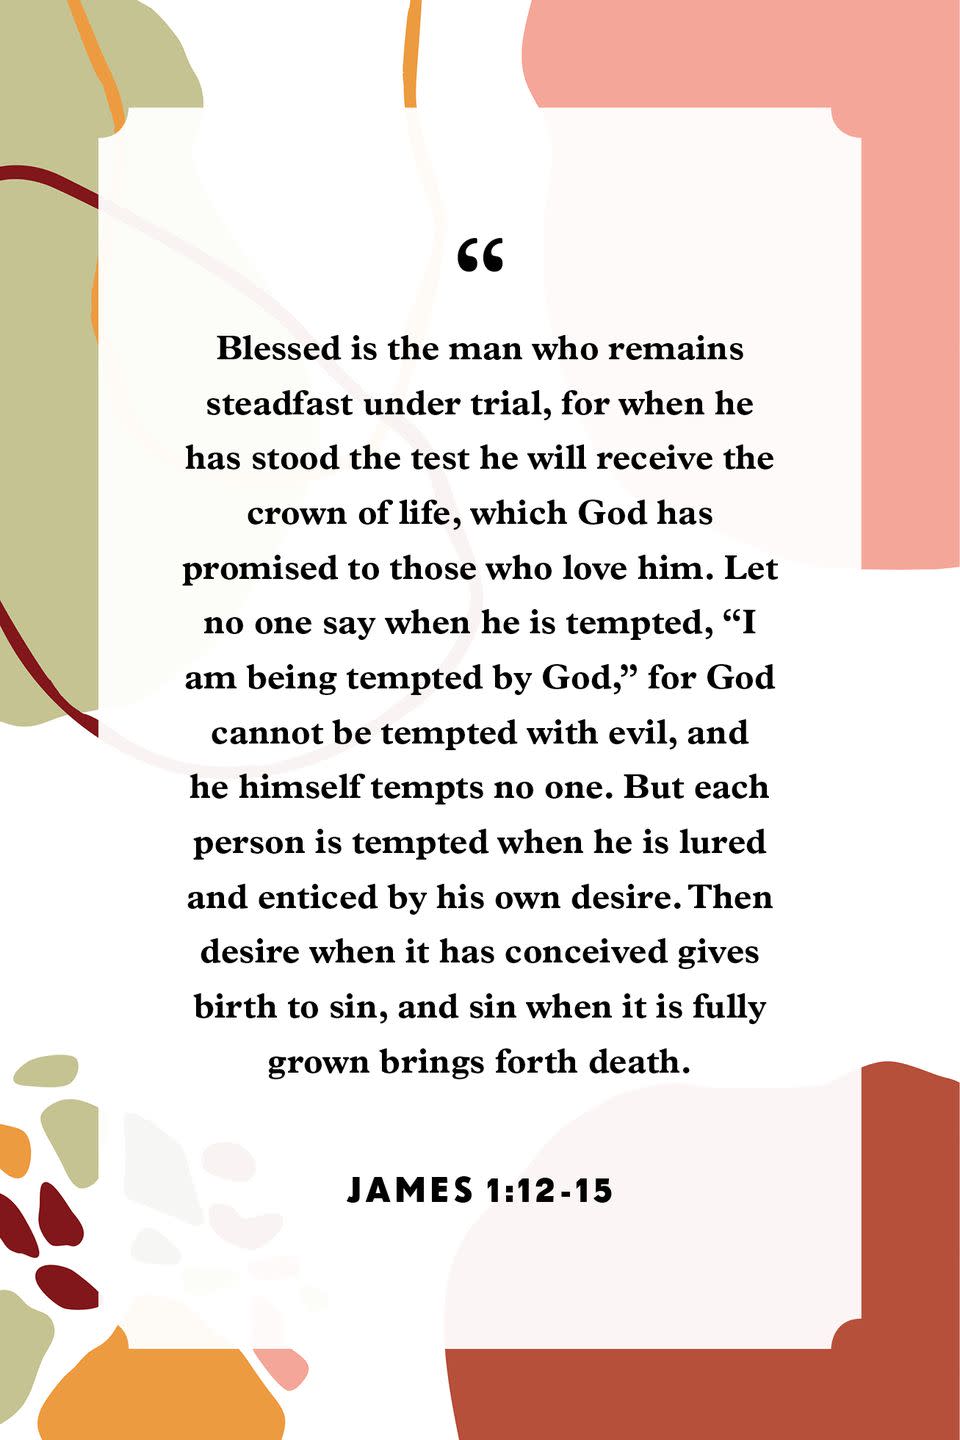 9) James 1:12-15